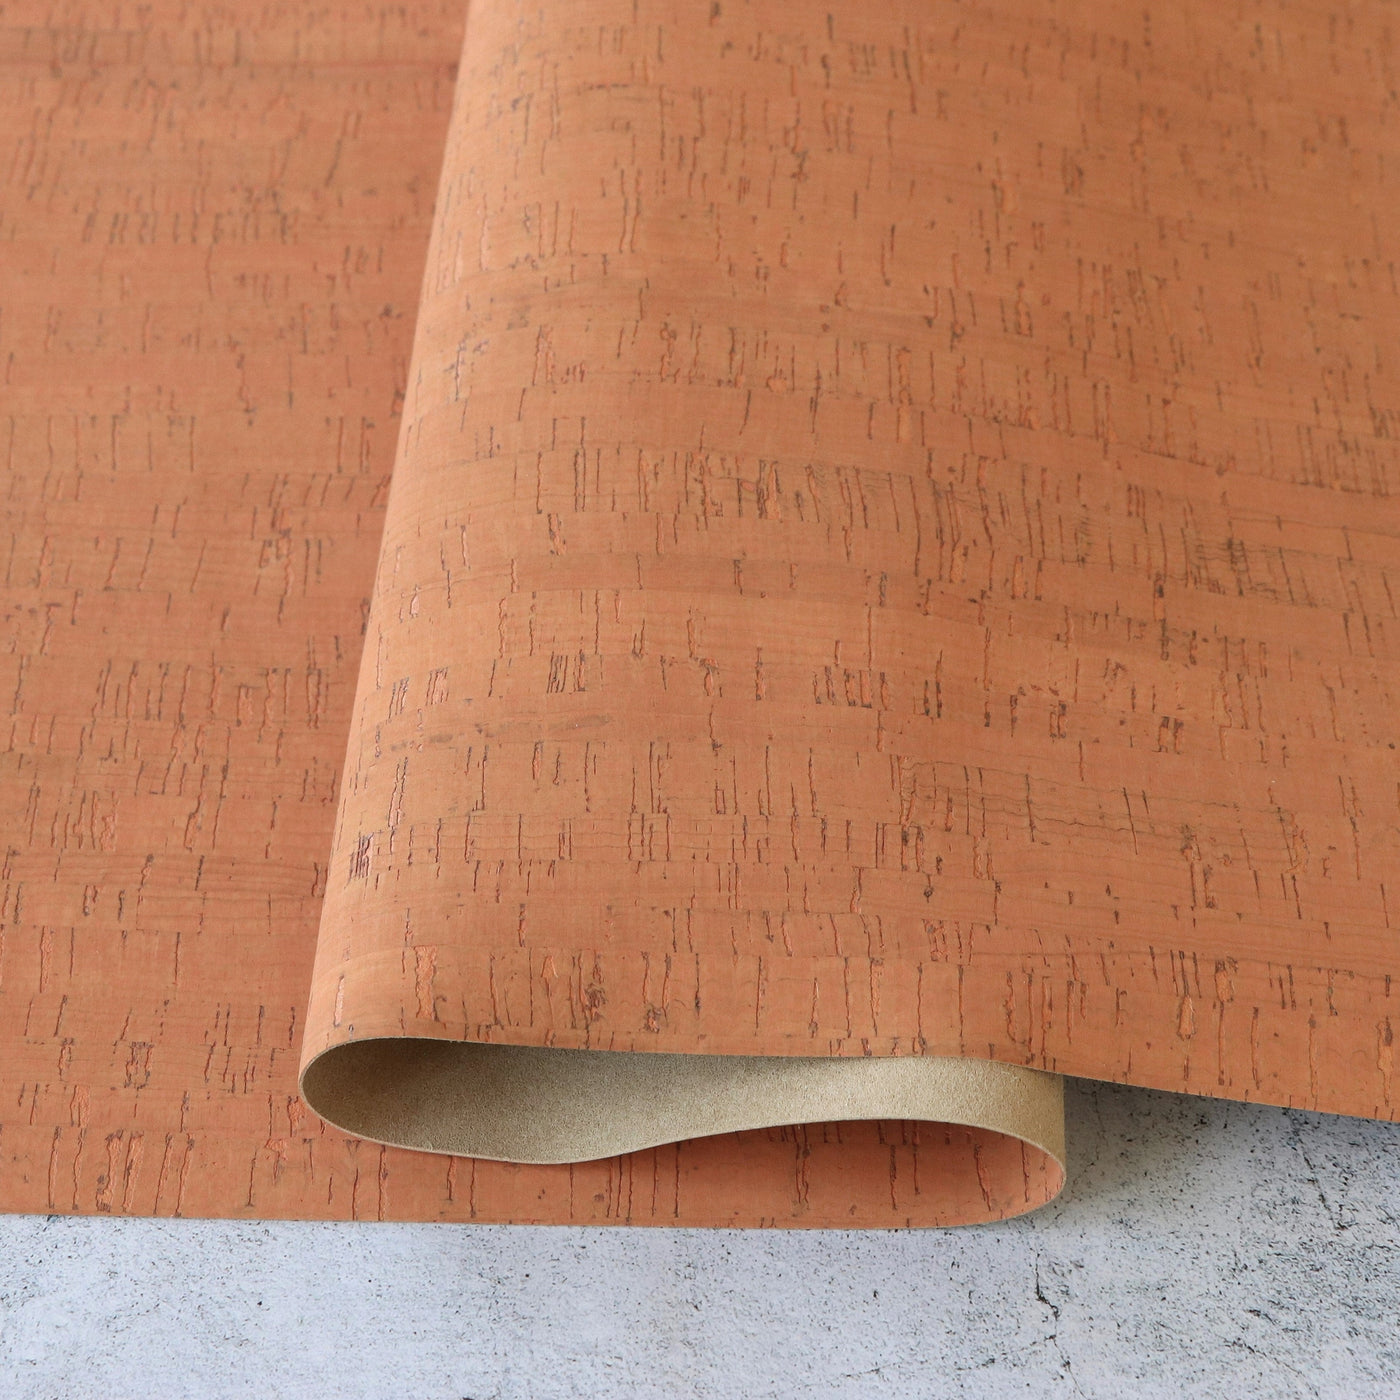 Rustic Sunstone Cork Fabric